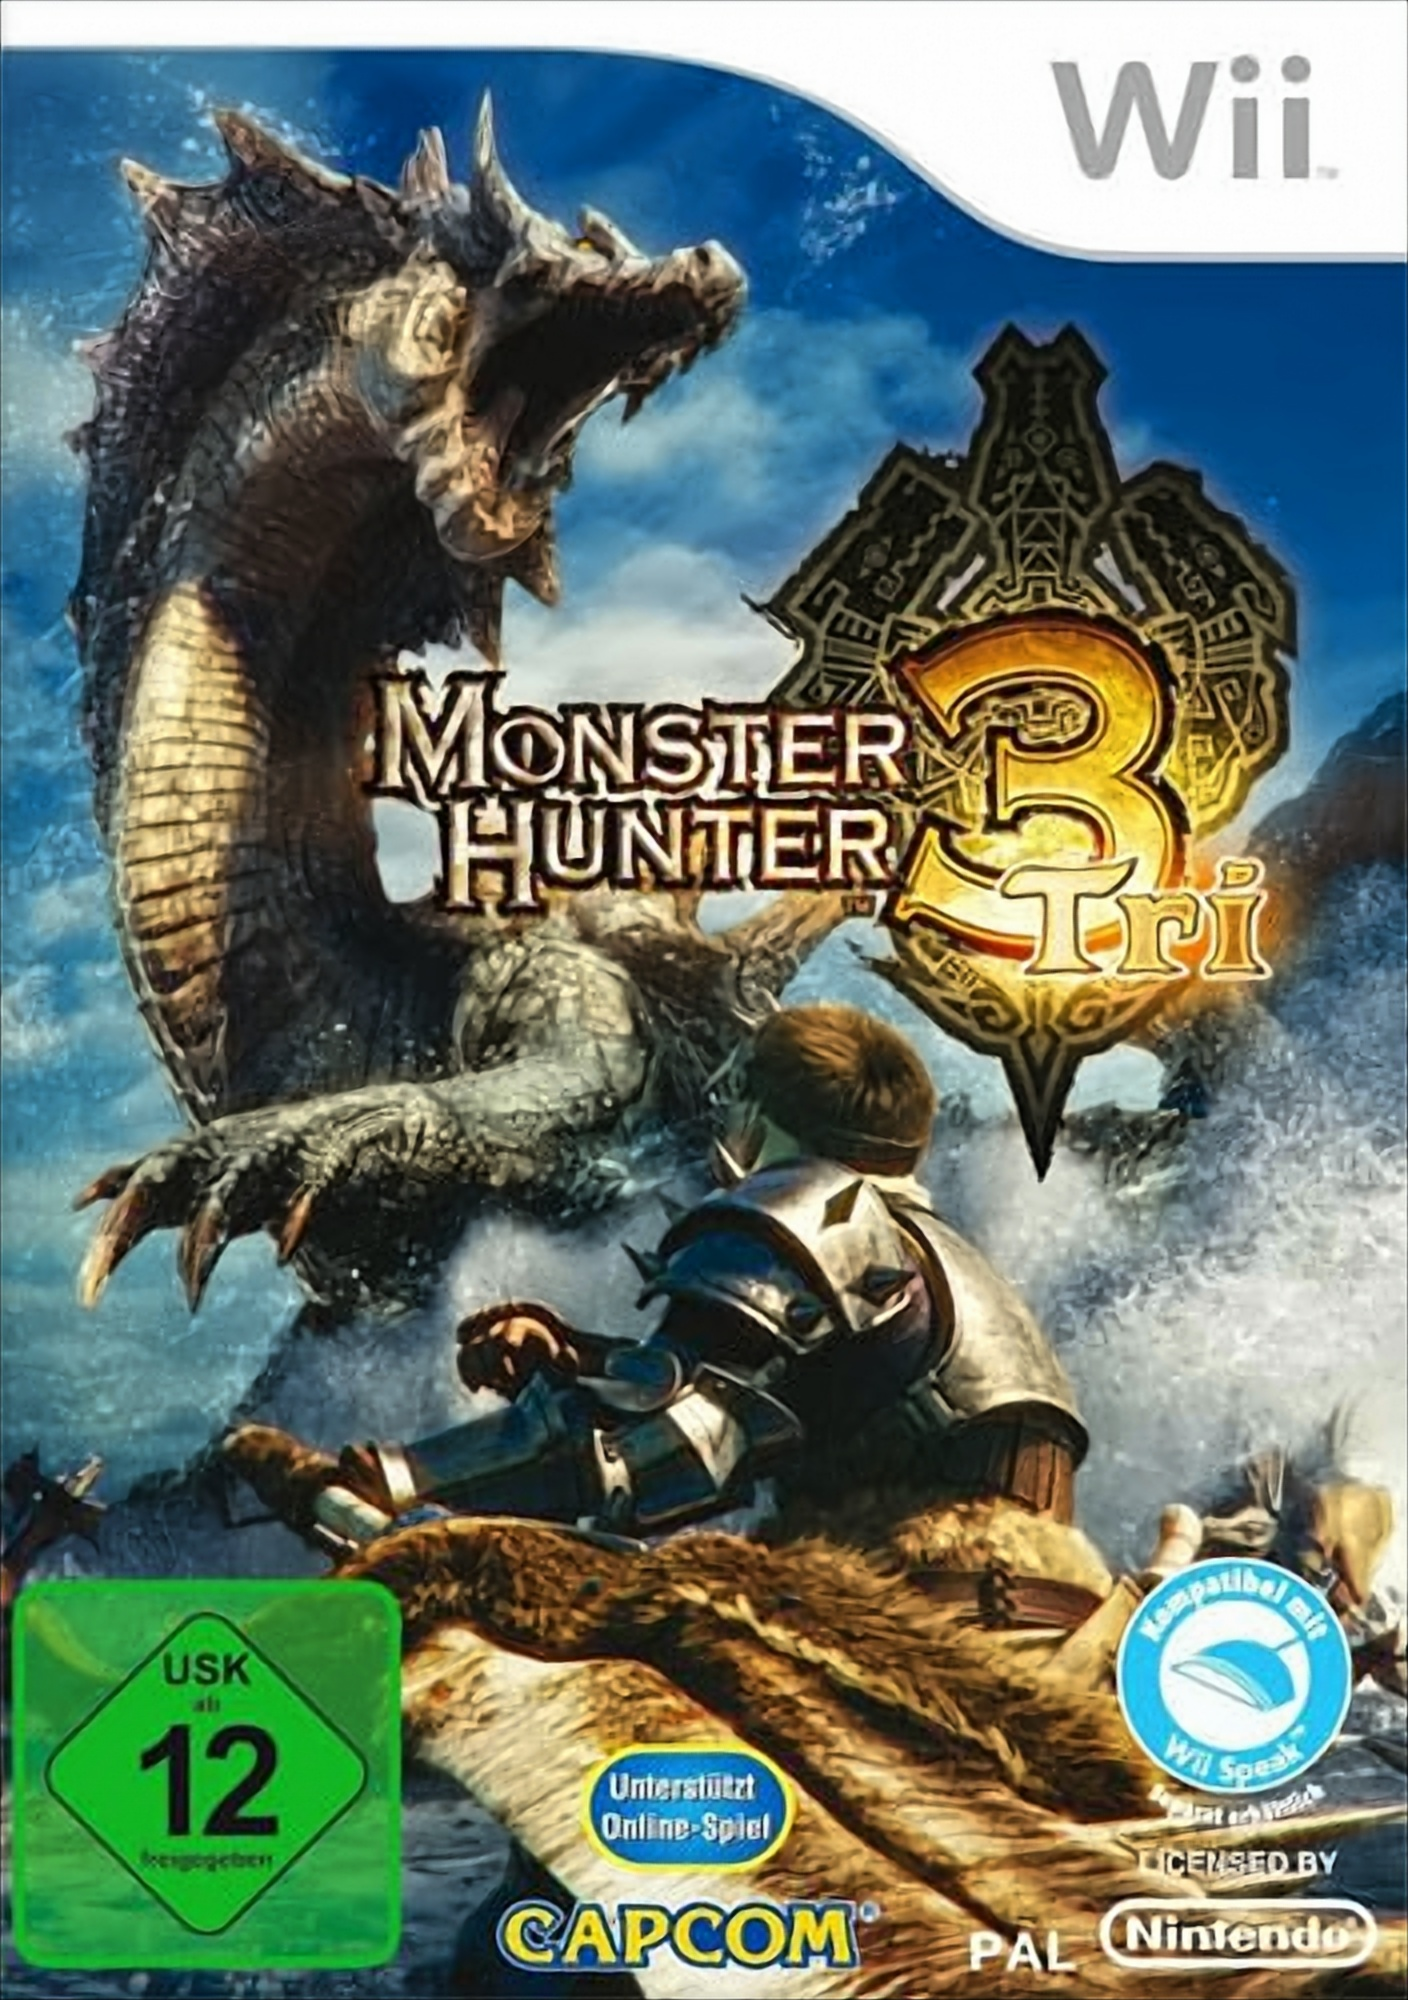 Monster Hunter Tri Wii Wii] - [Nintendo